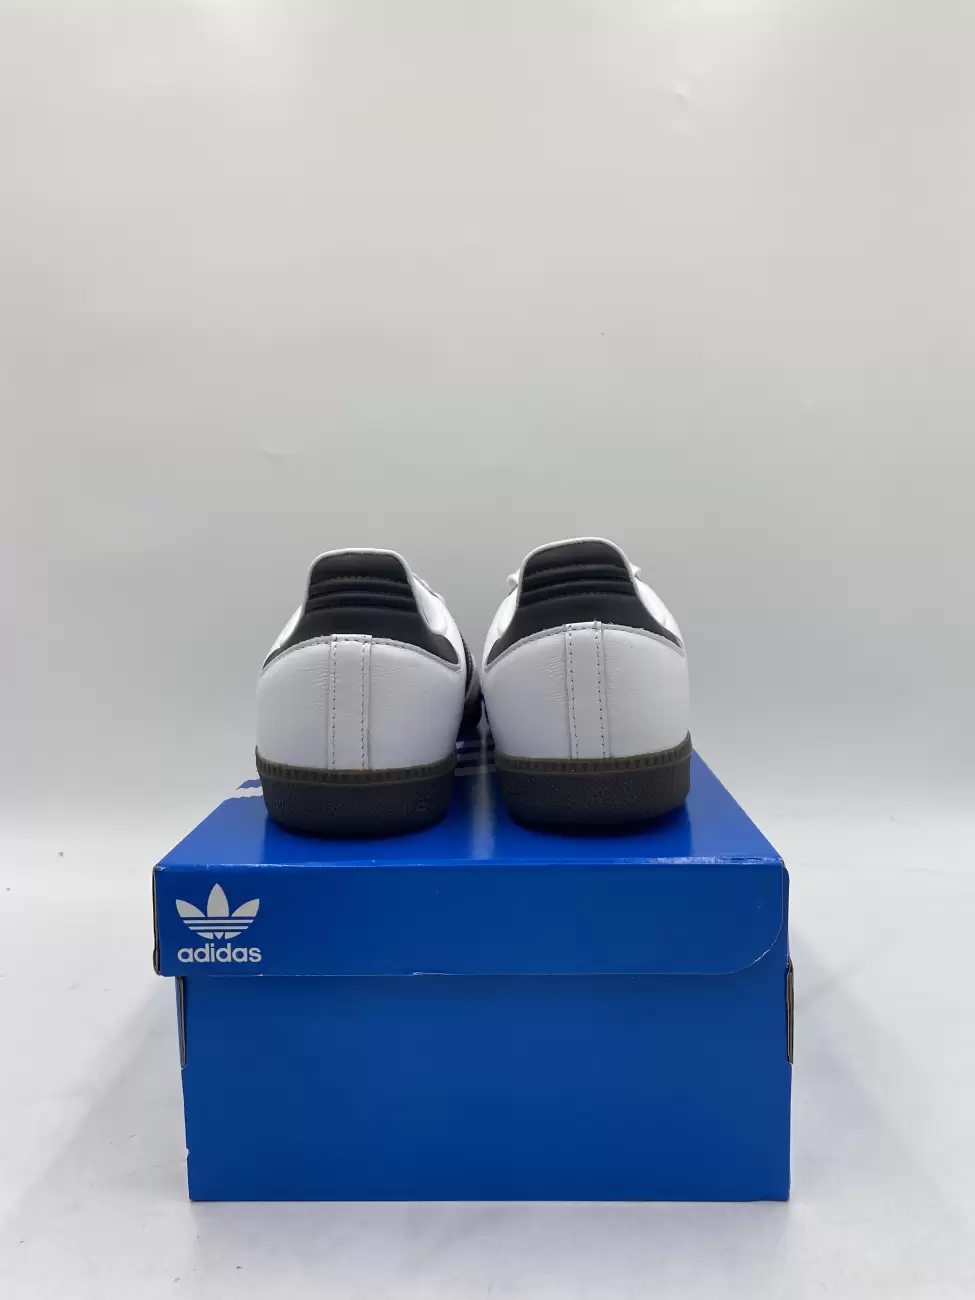 45755 - Adidas Samba OG Cloud White Core Black | Item Details - AfterMarket